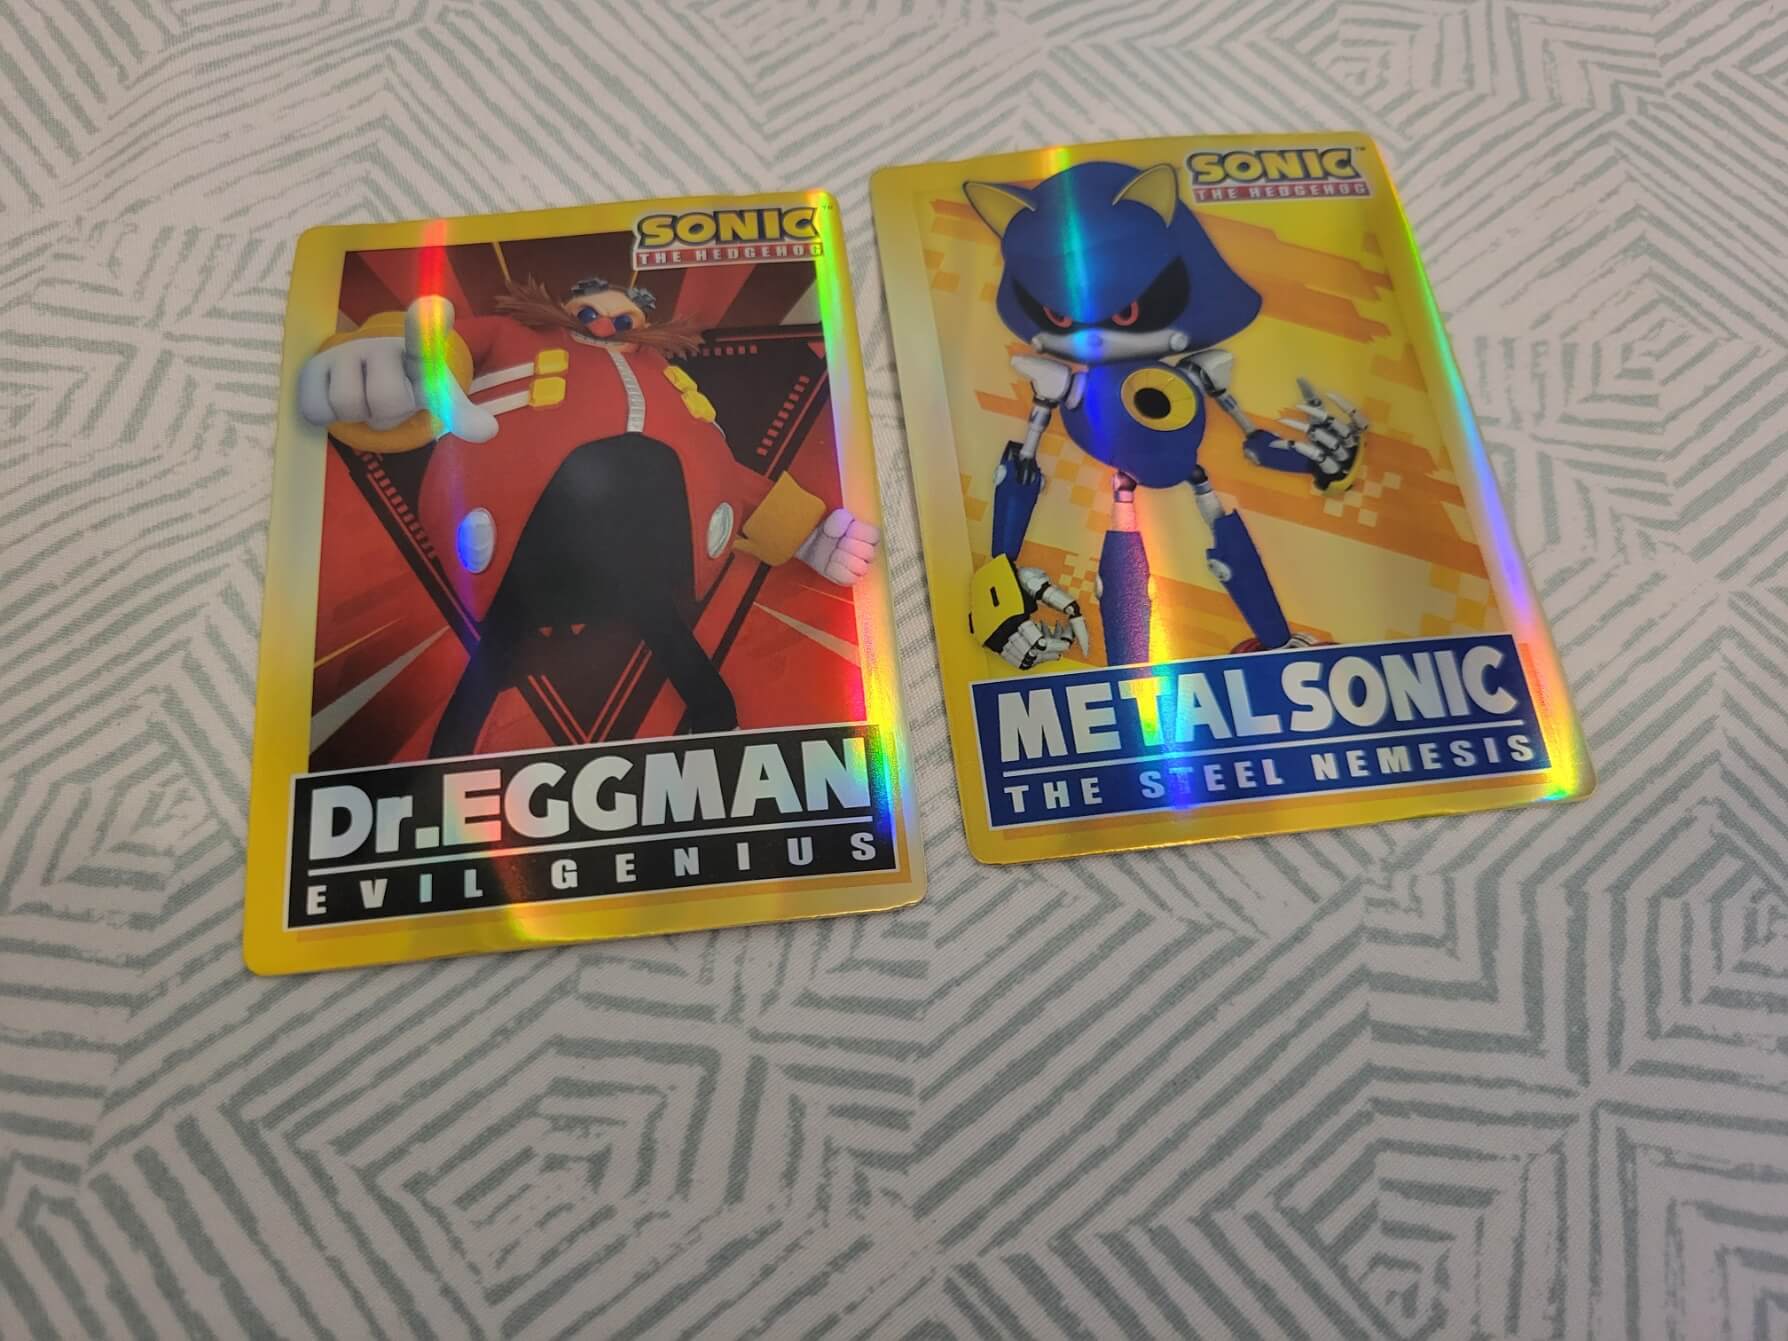 Eggman and Metal Sonic shiny cards